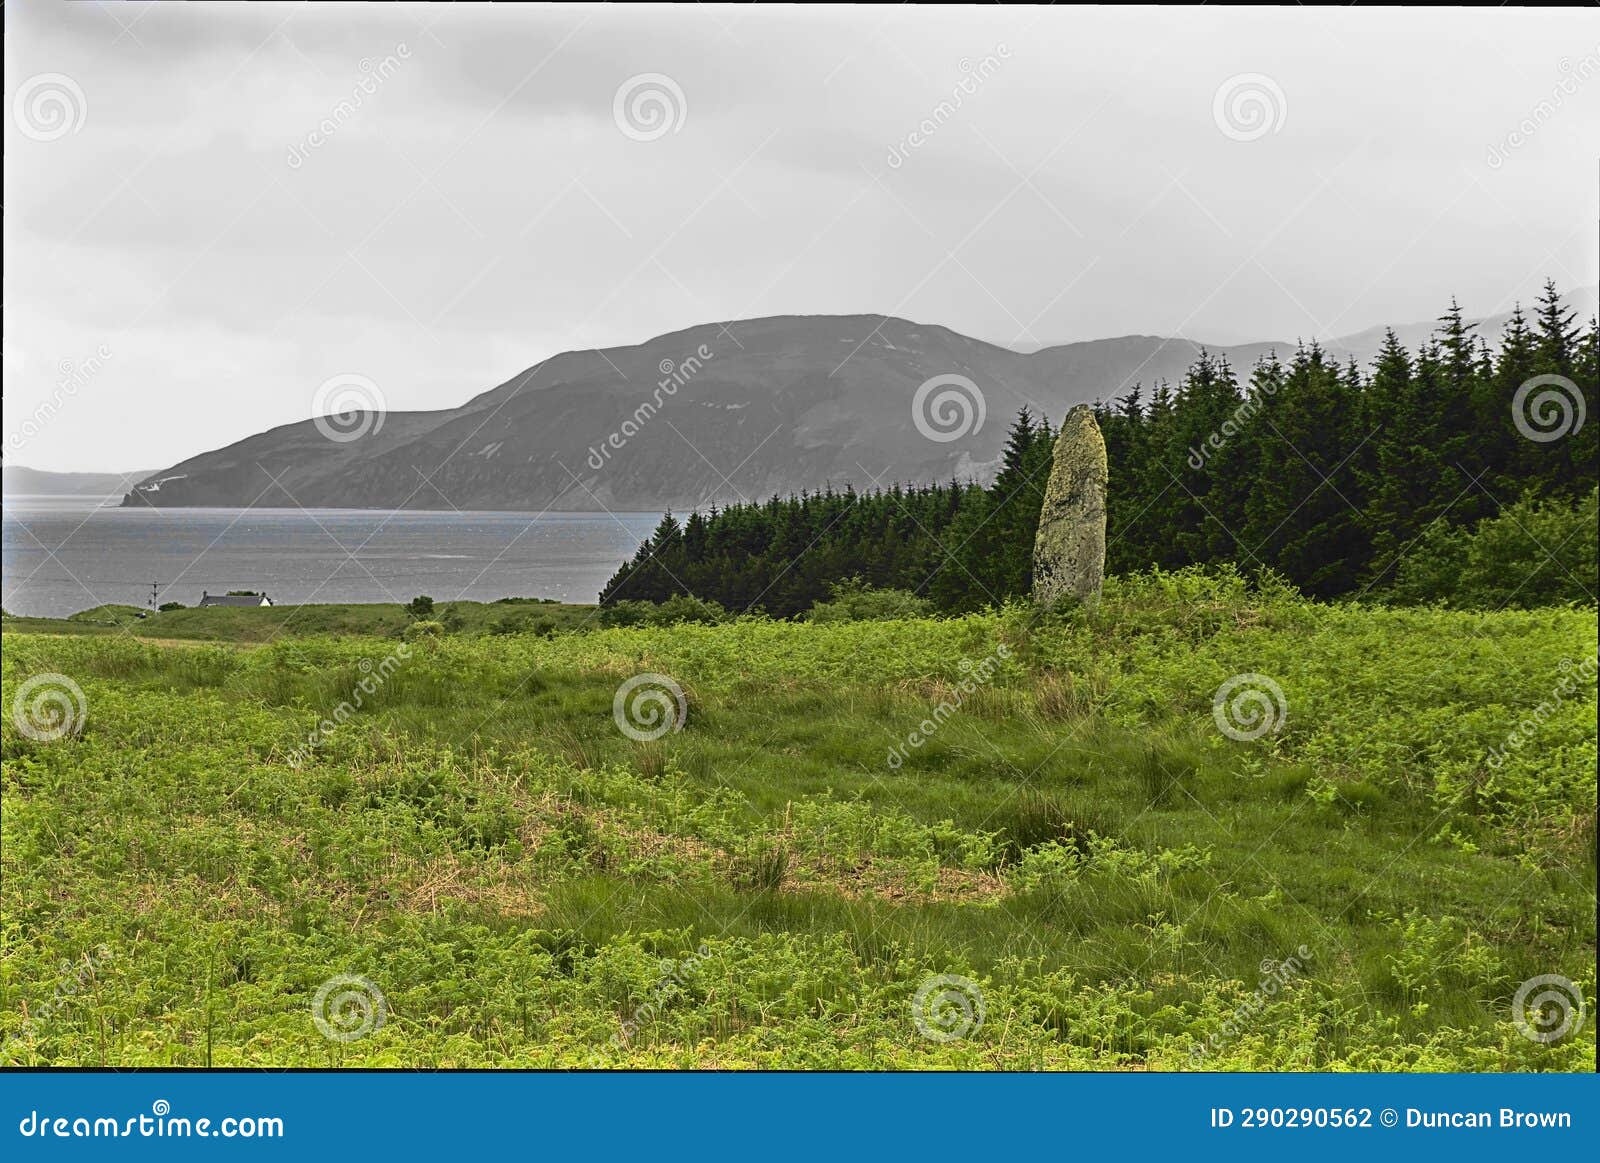 cama an staca, standing stone, isle of jura, scotland